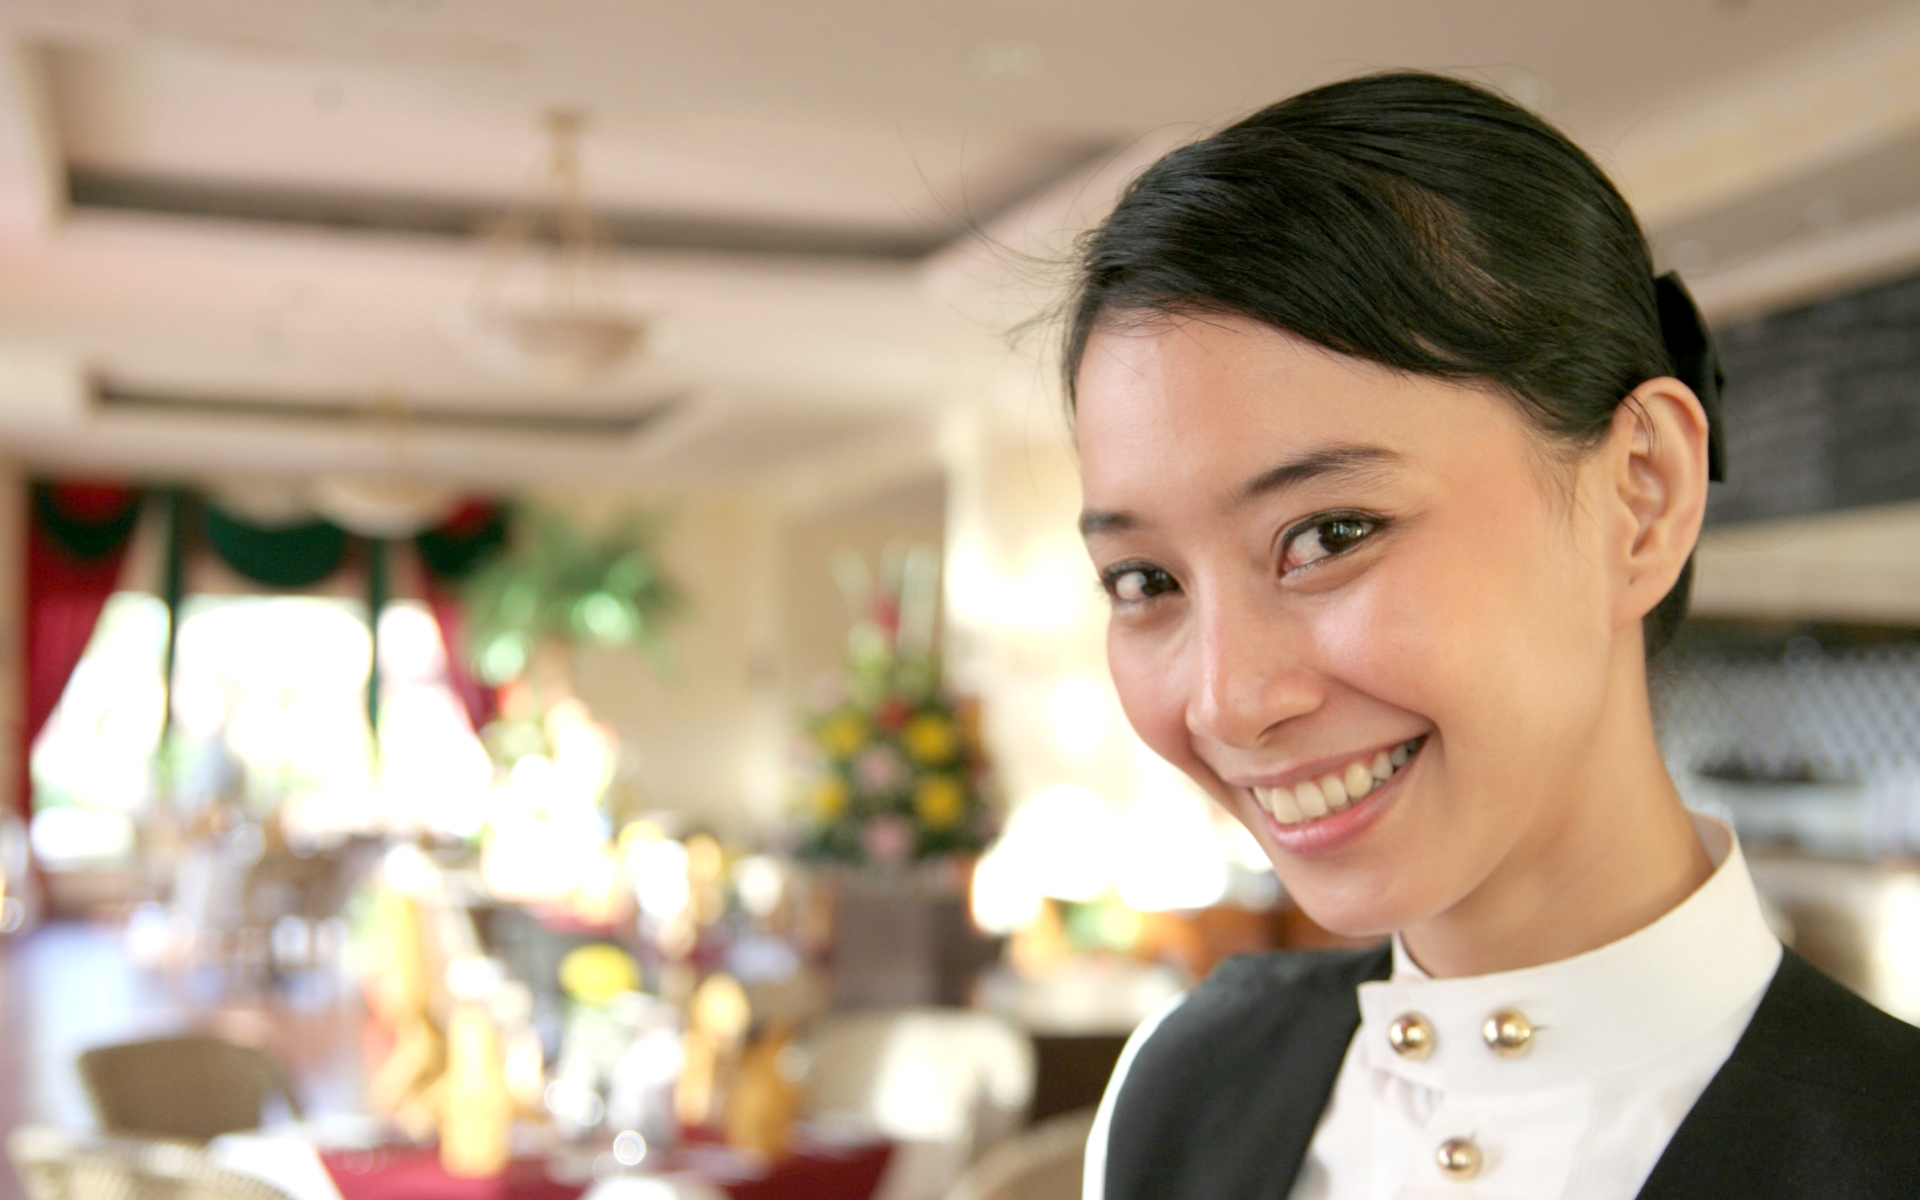 Hotel attendant smiling